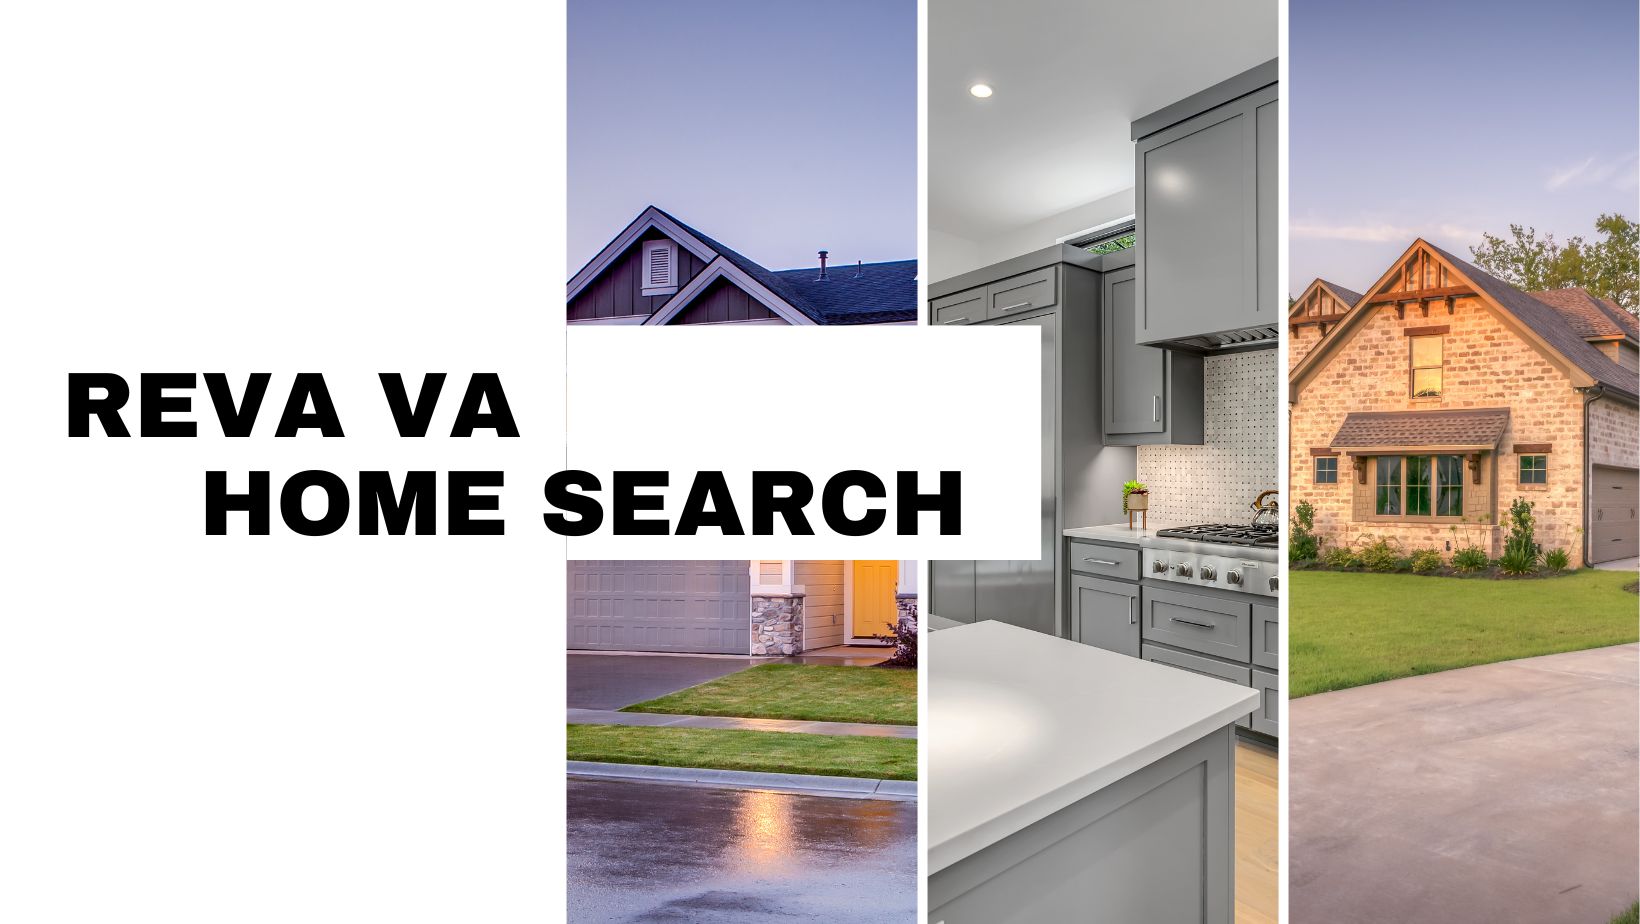 Reva VA Homes for Sale